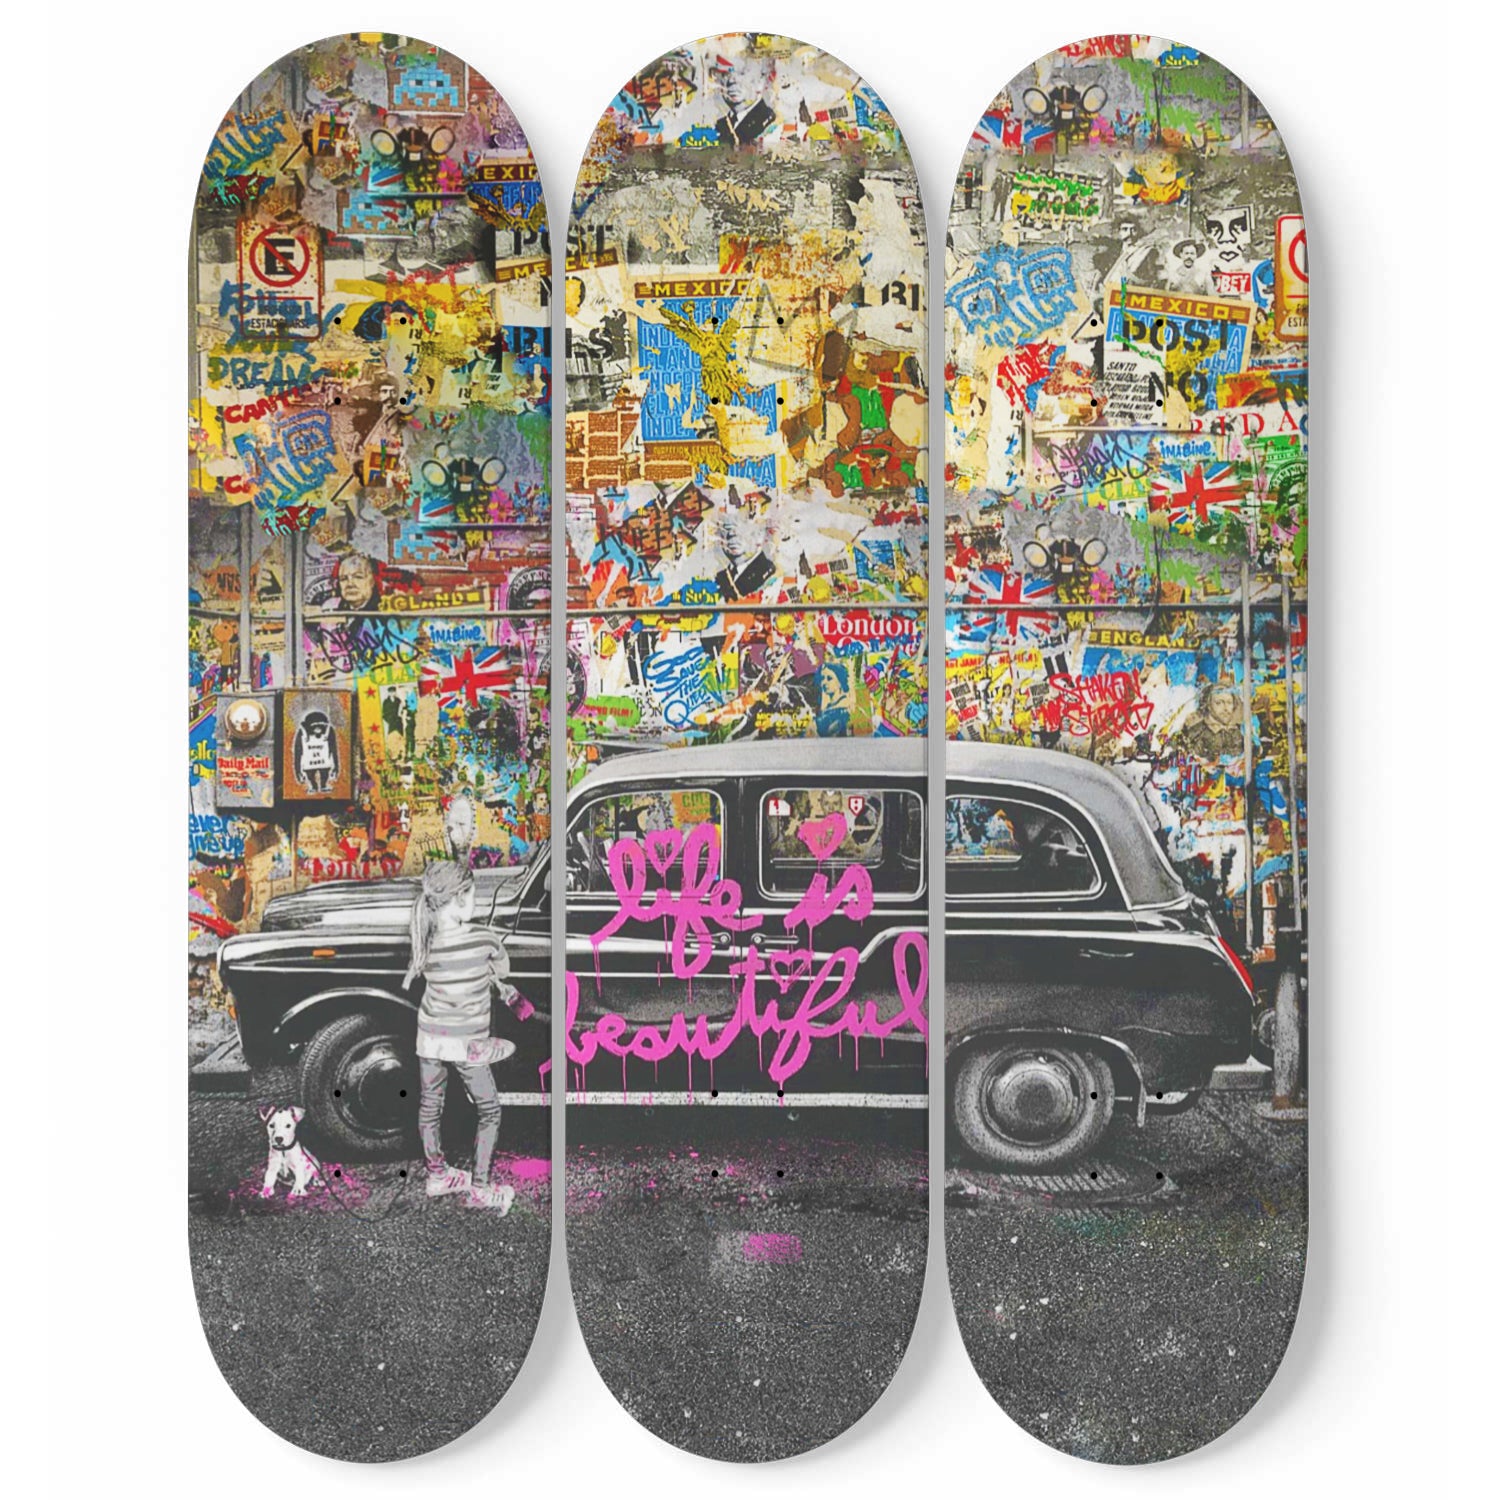 Black Taxi Graffiti Inspired Compilation Art Skate Deck Art Maple Wood Wall Hanging Bedroom Room Decor